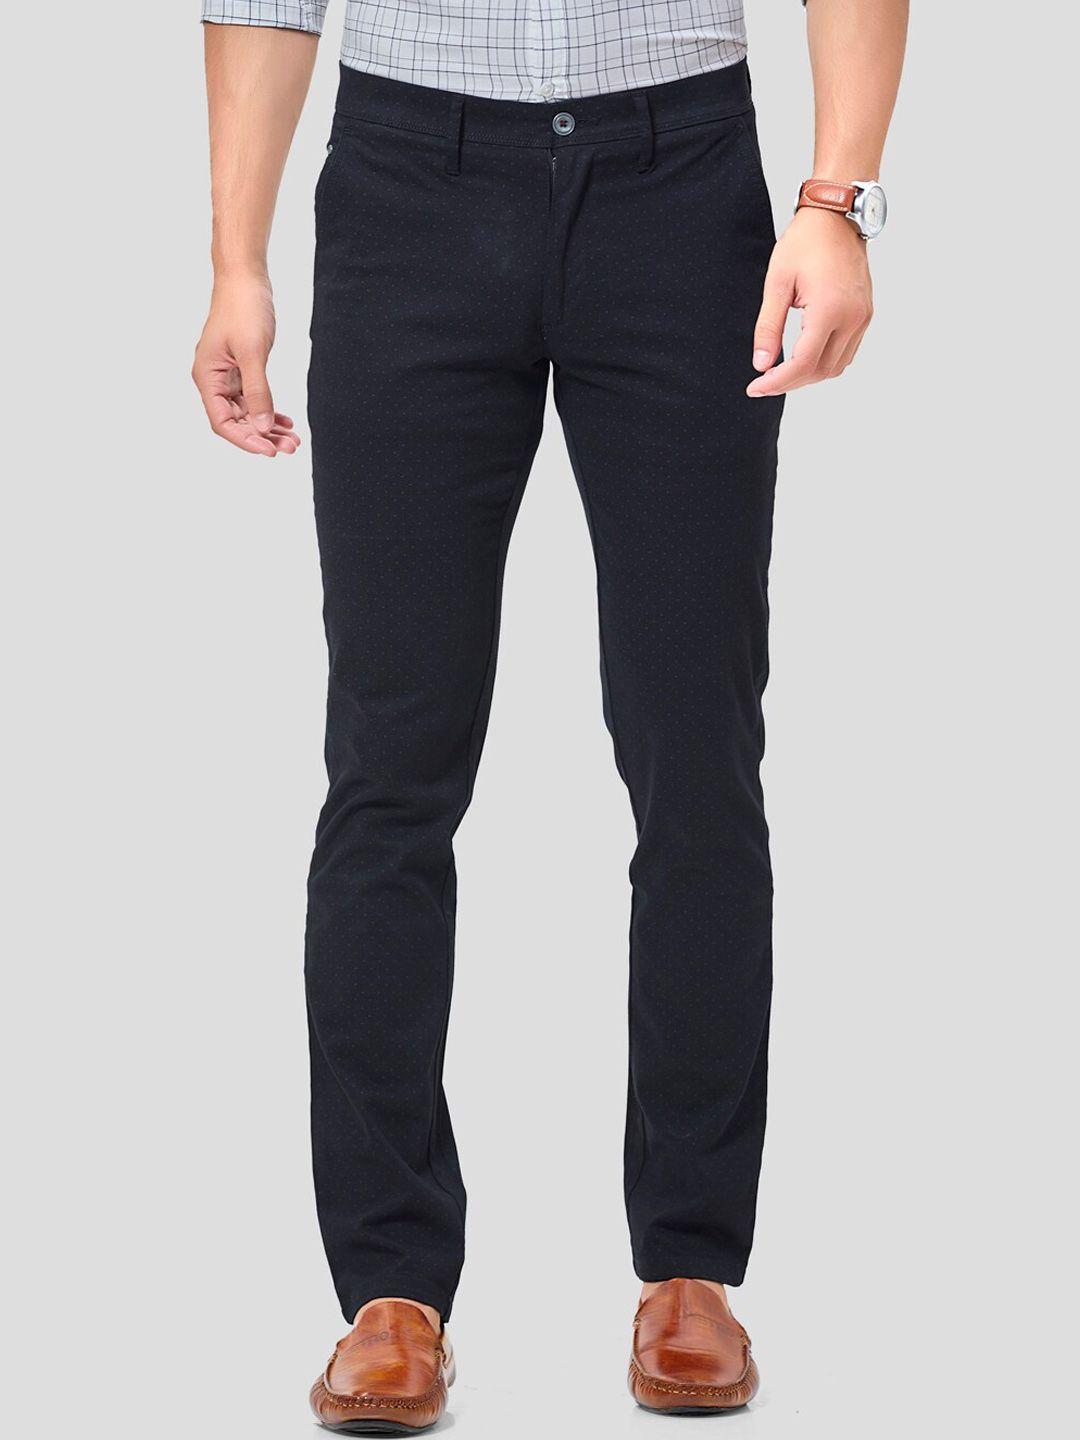 oxemberg men black printed smart slim fit chinos trousers